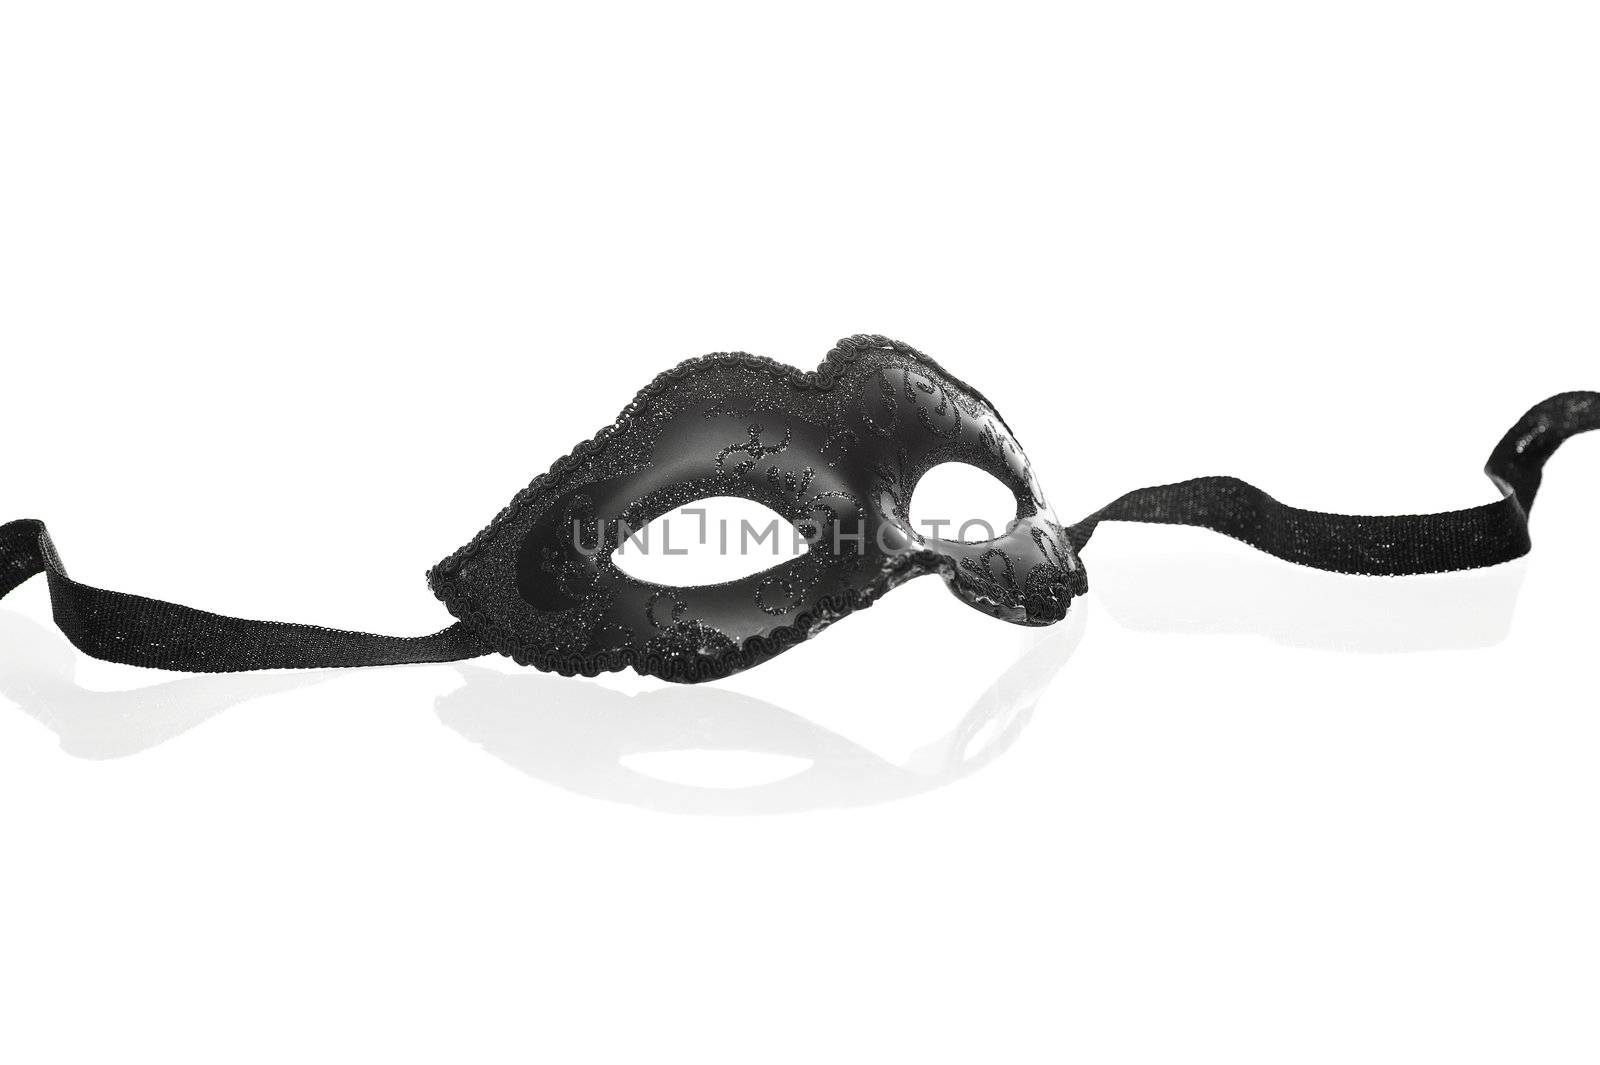 Black mask on white background by stockbymh